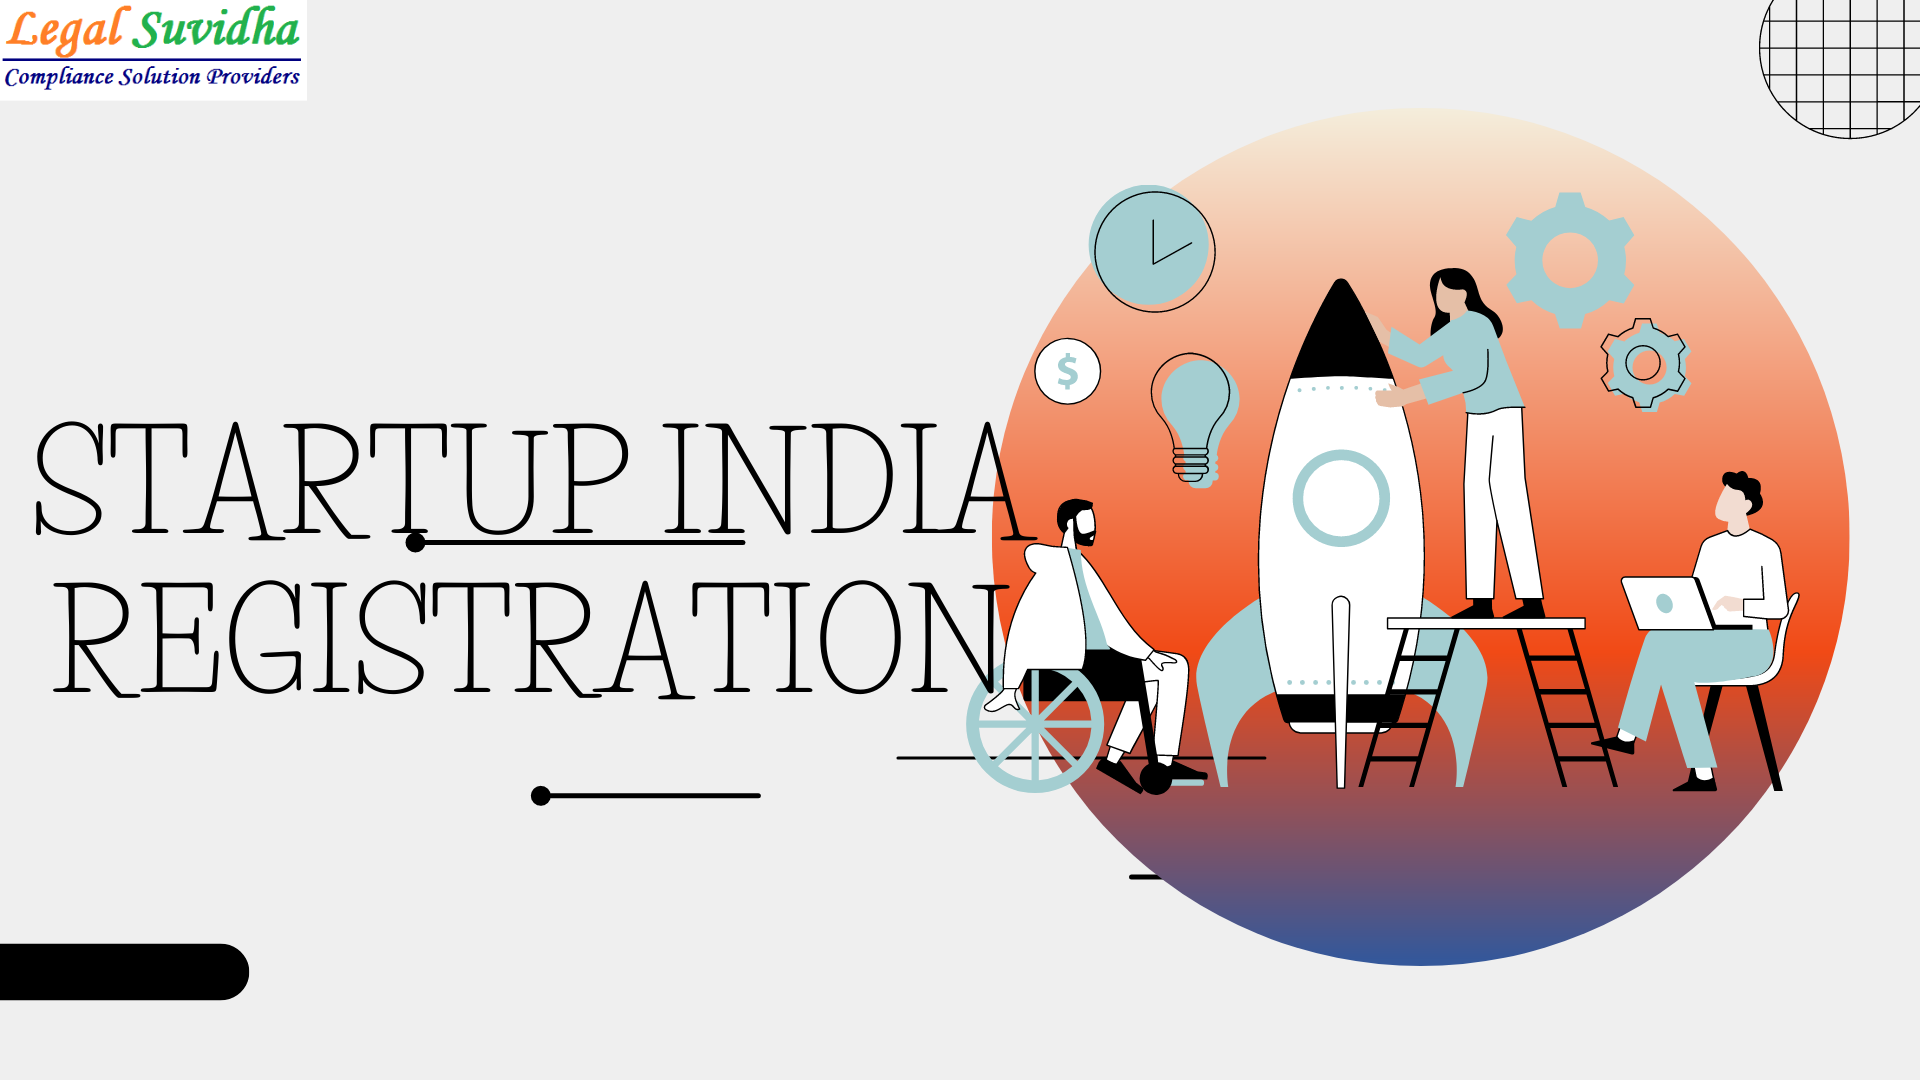 Benefits of Startup India Registration